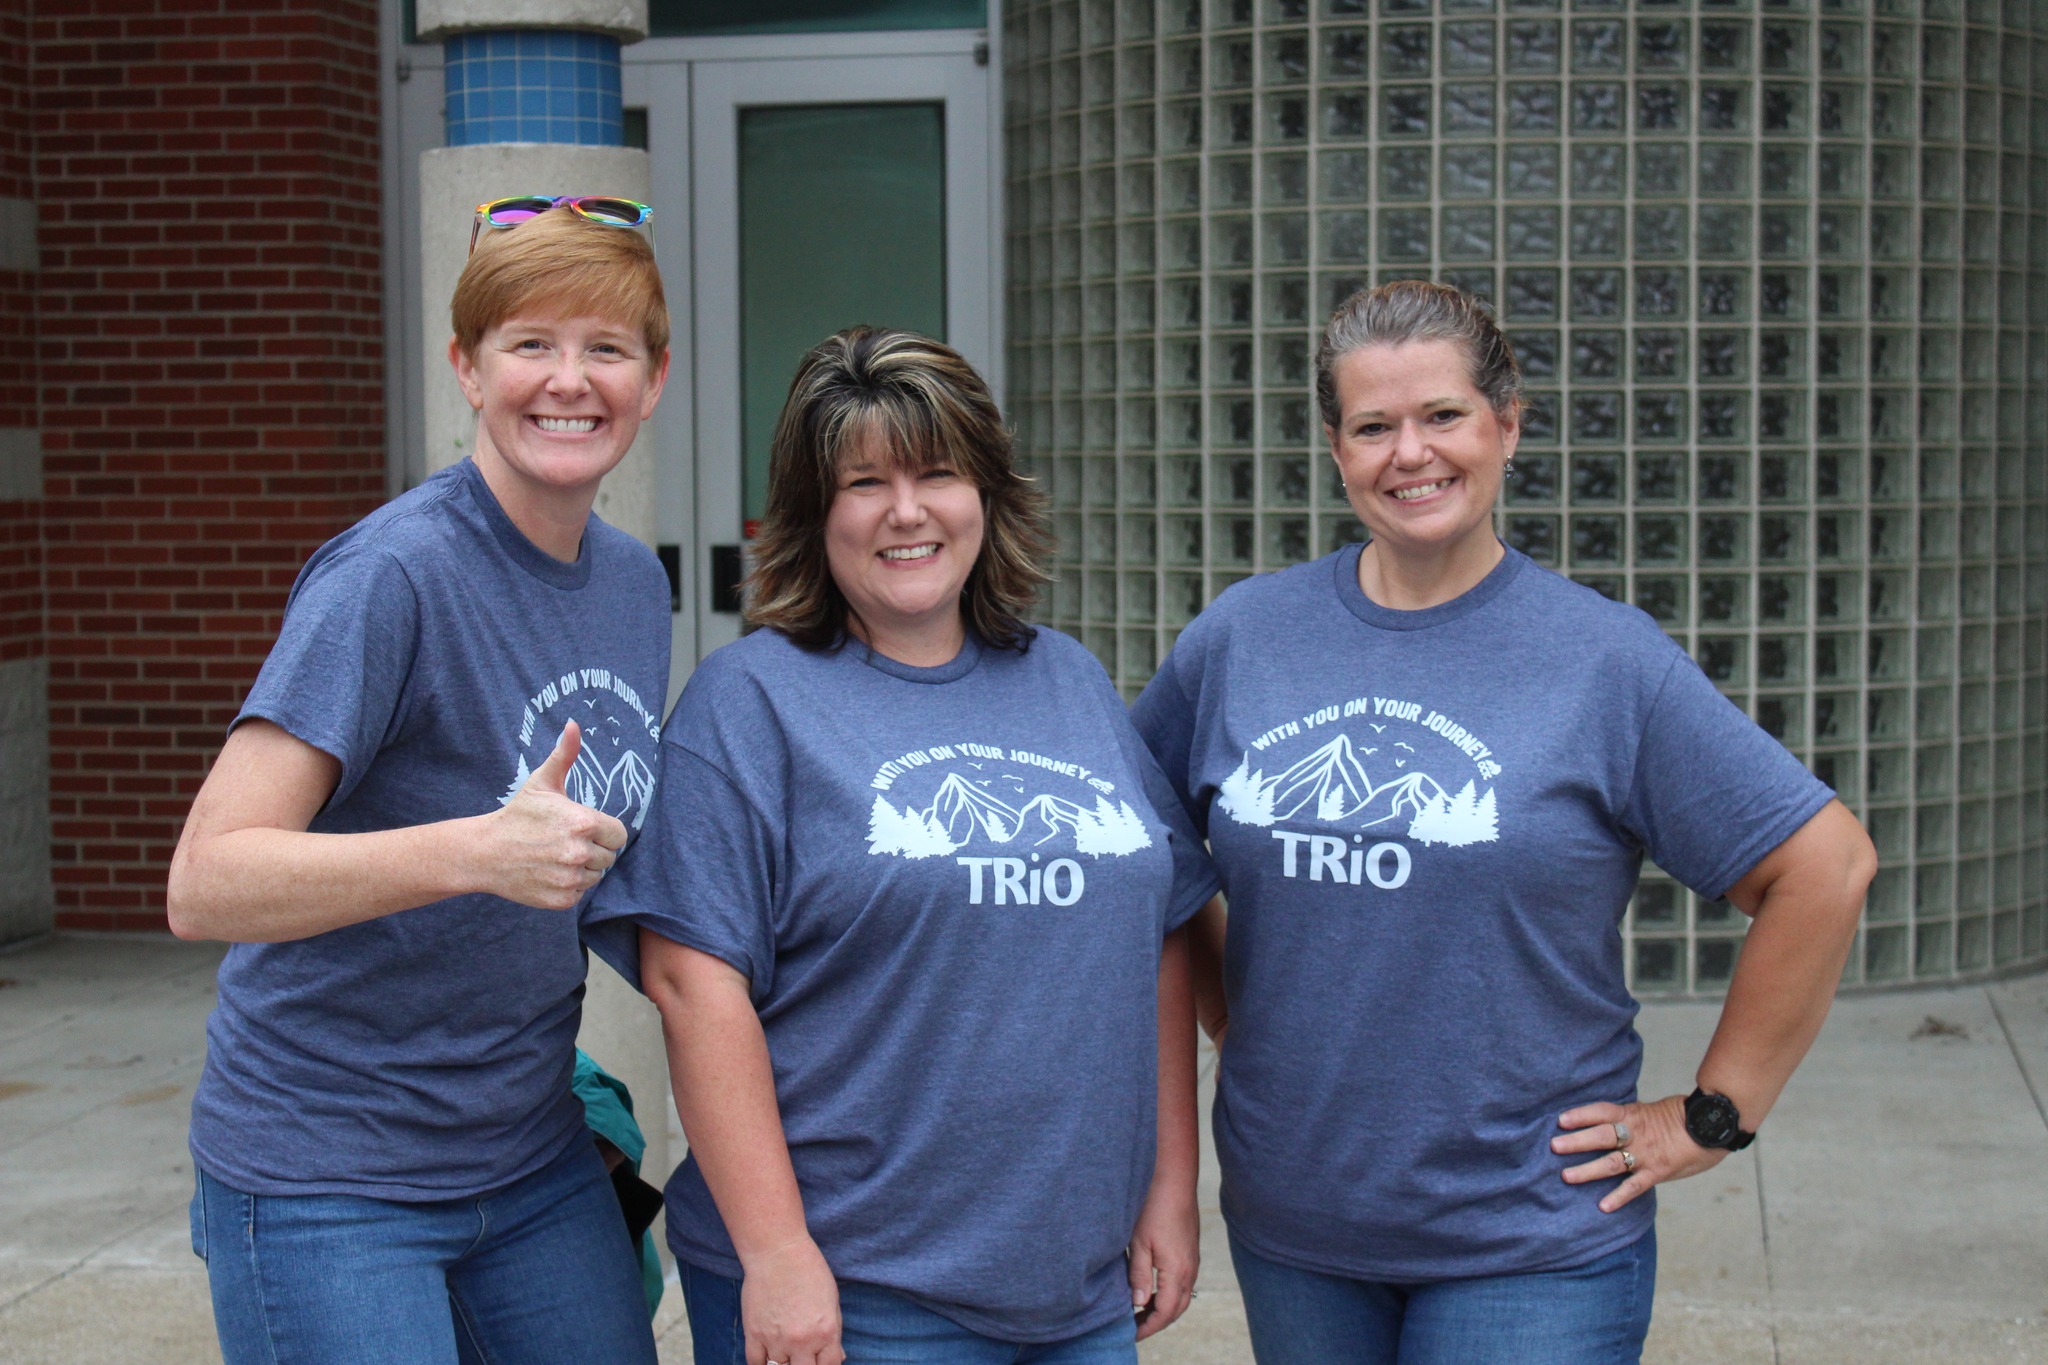 The ladies of TRiO: Mary Bruner, Beck Hodskins, and Lindsey Greer